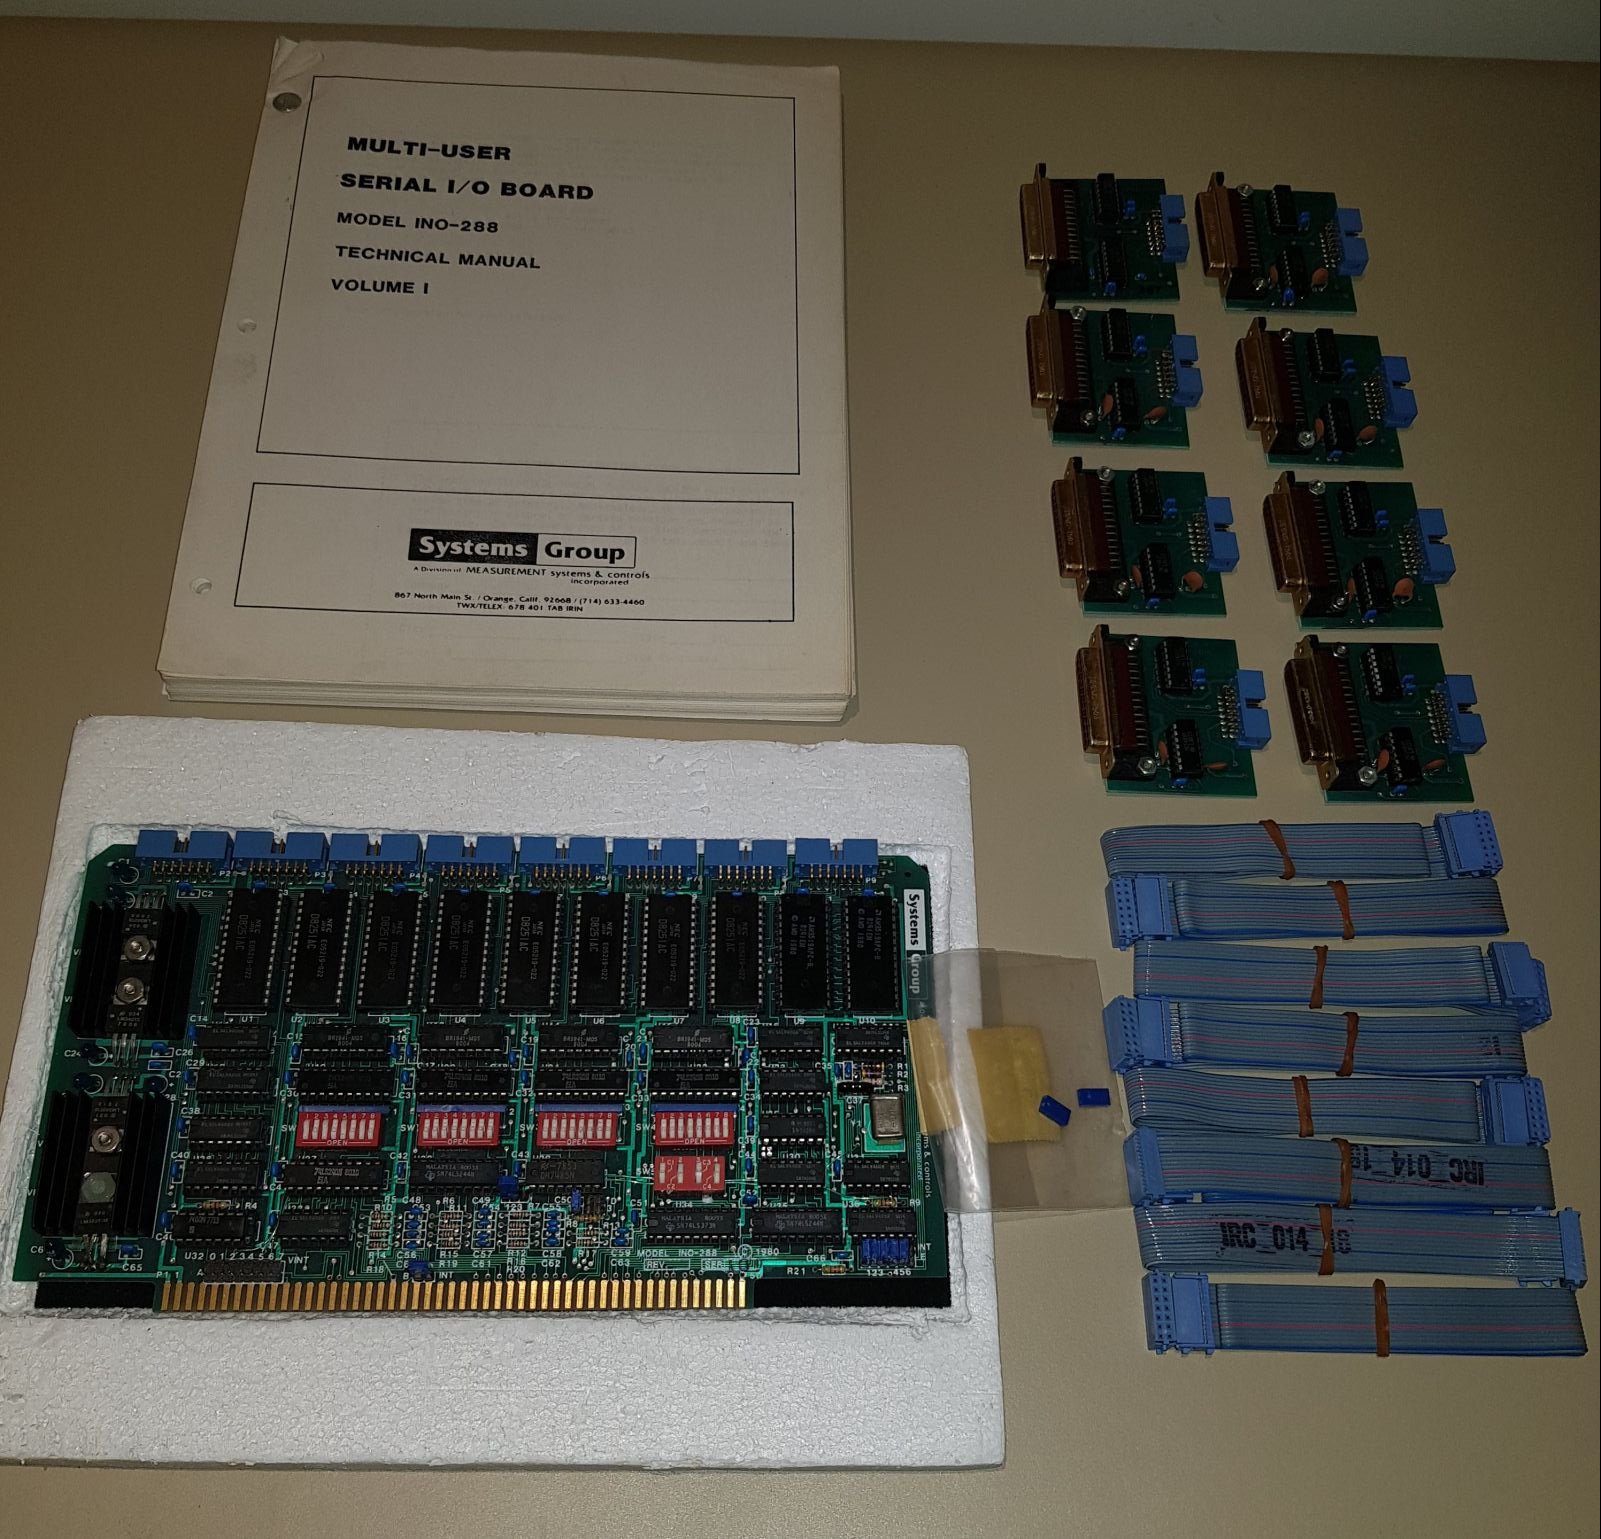 Systems Group Multi-User Serial I/O Board INO-288